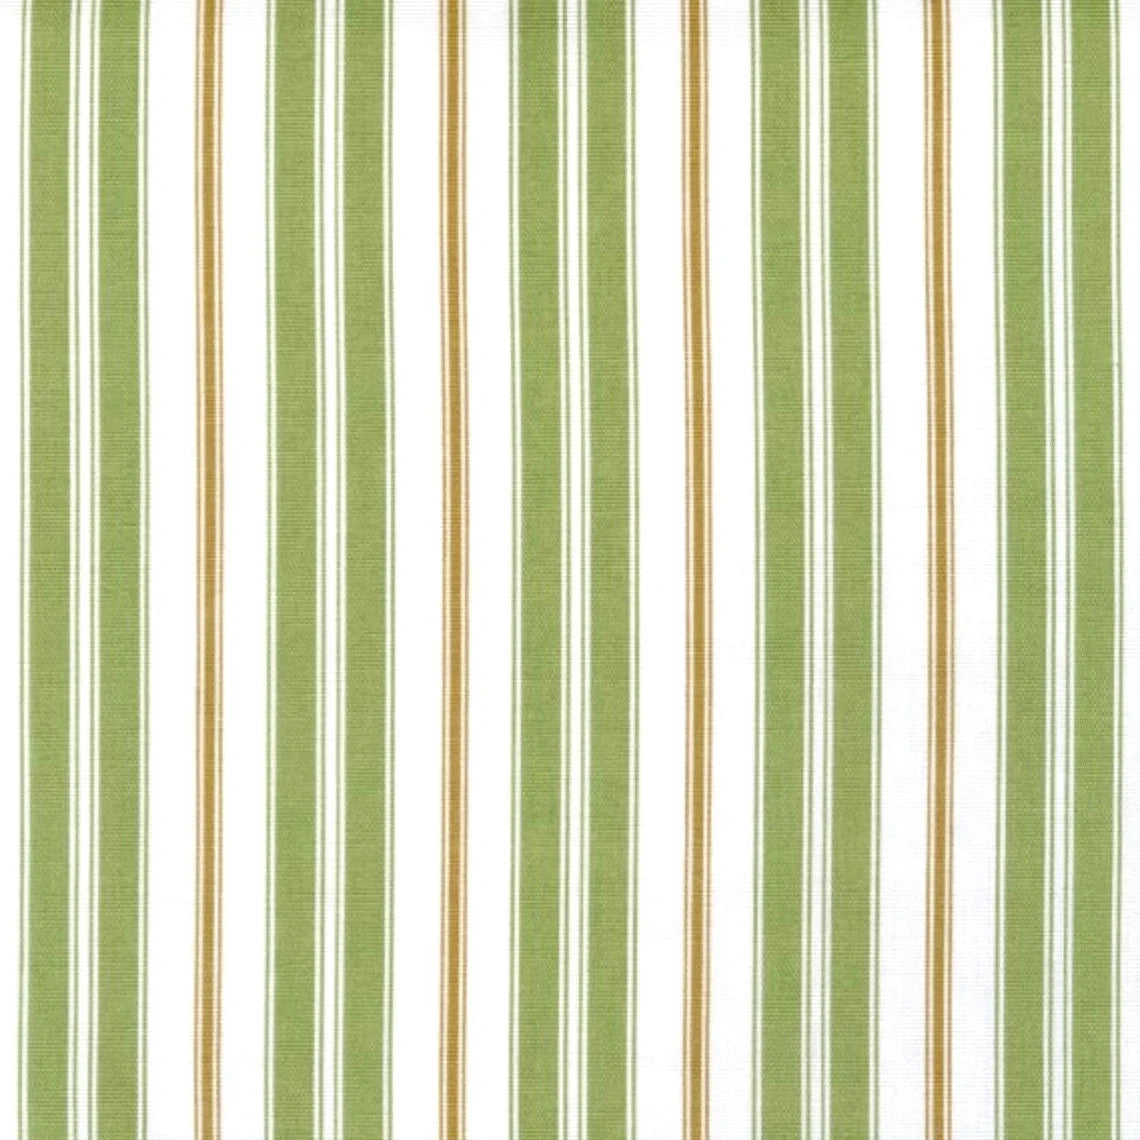 shower curtain in newbury aloe green stripe- green, brown, white